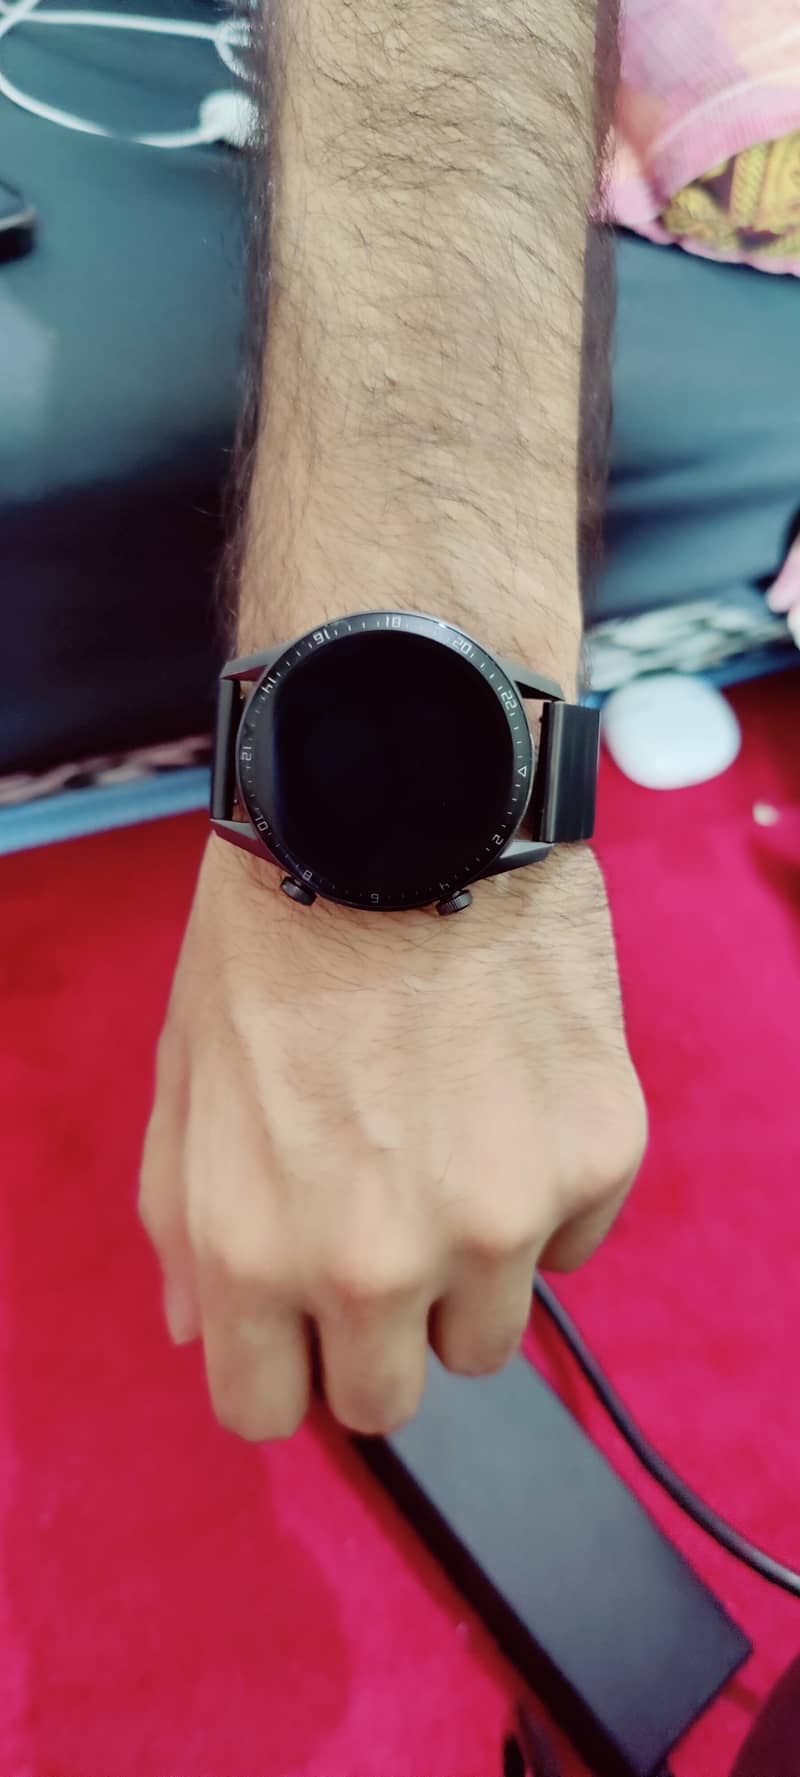 Huawei GT-2 (46mm) smart watch 5